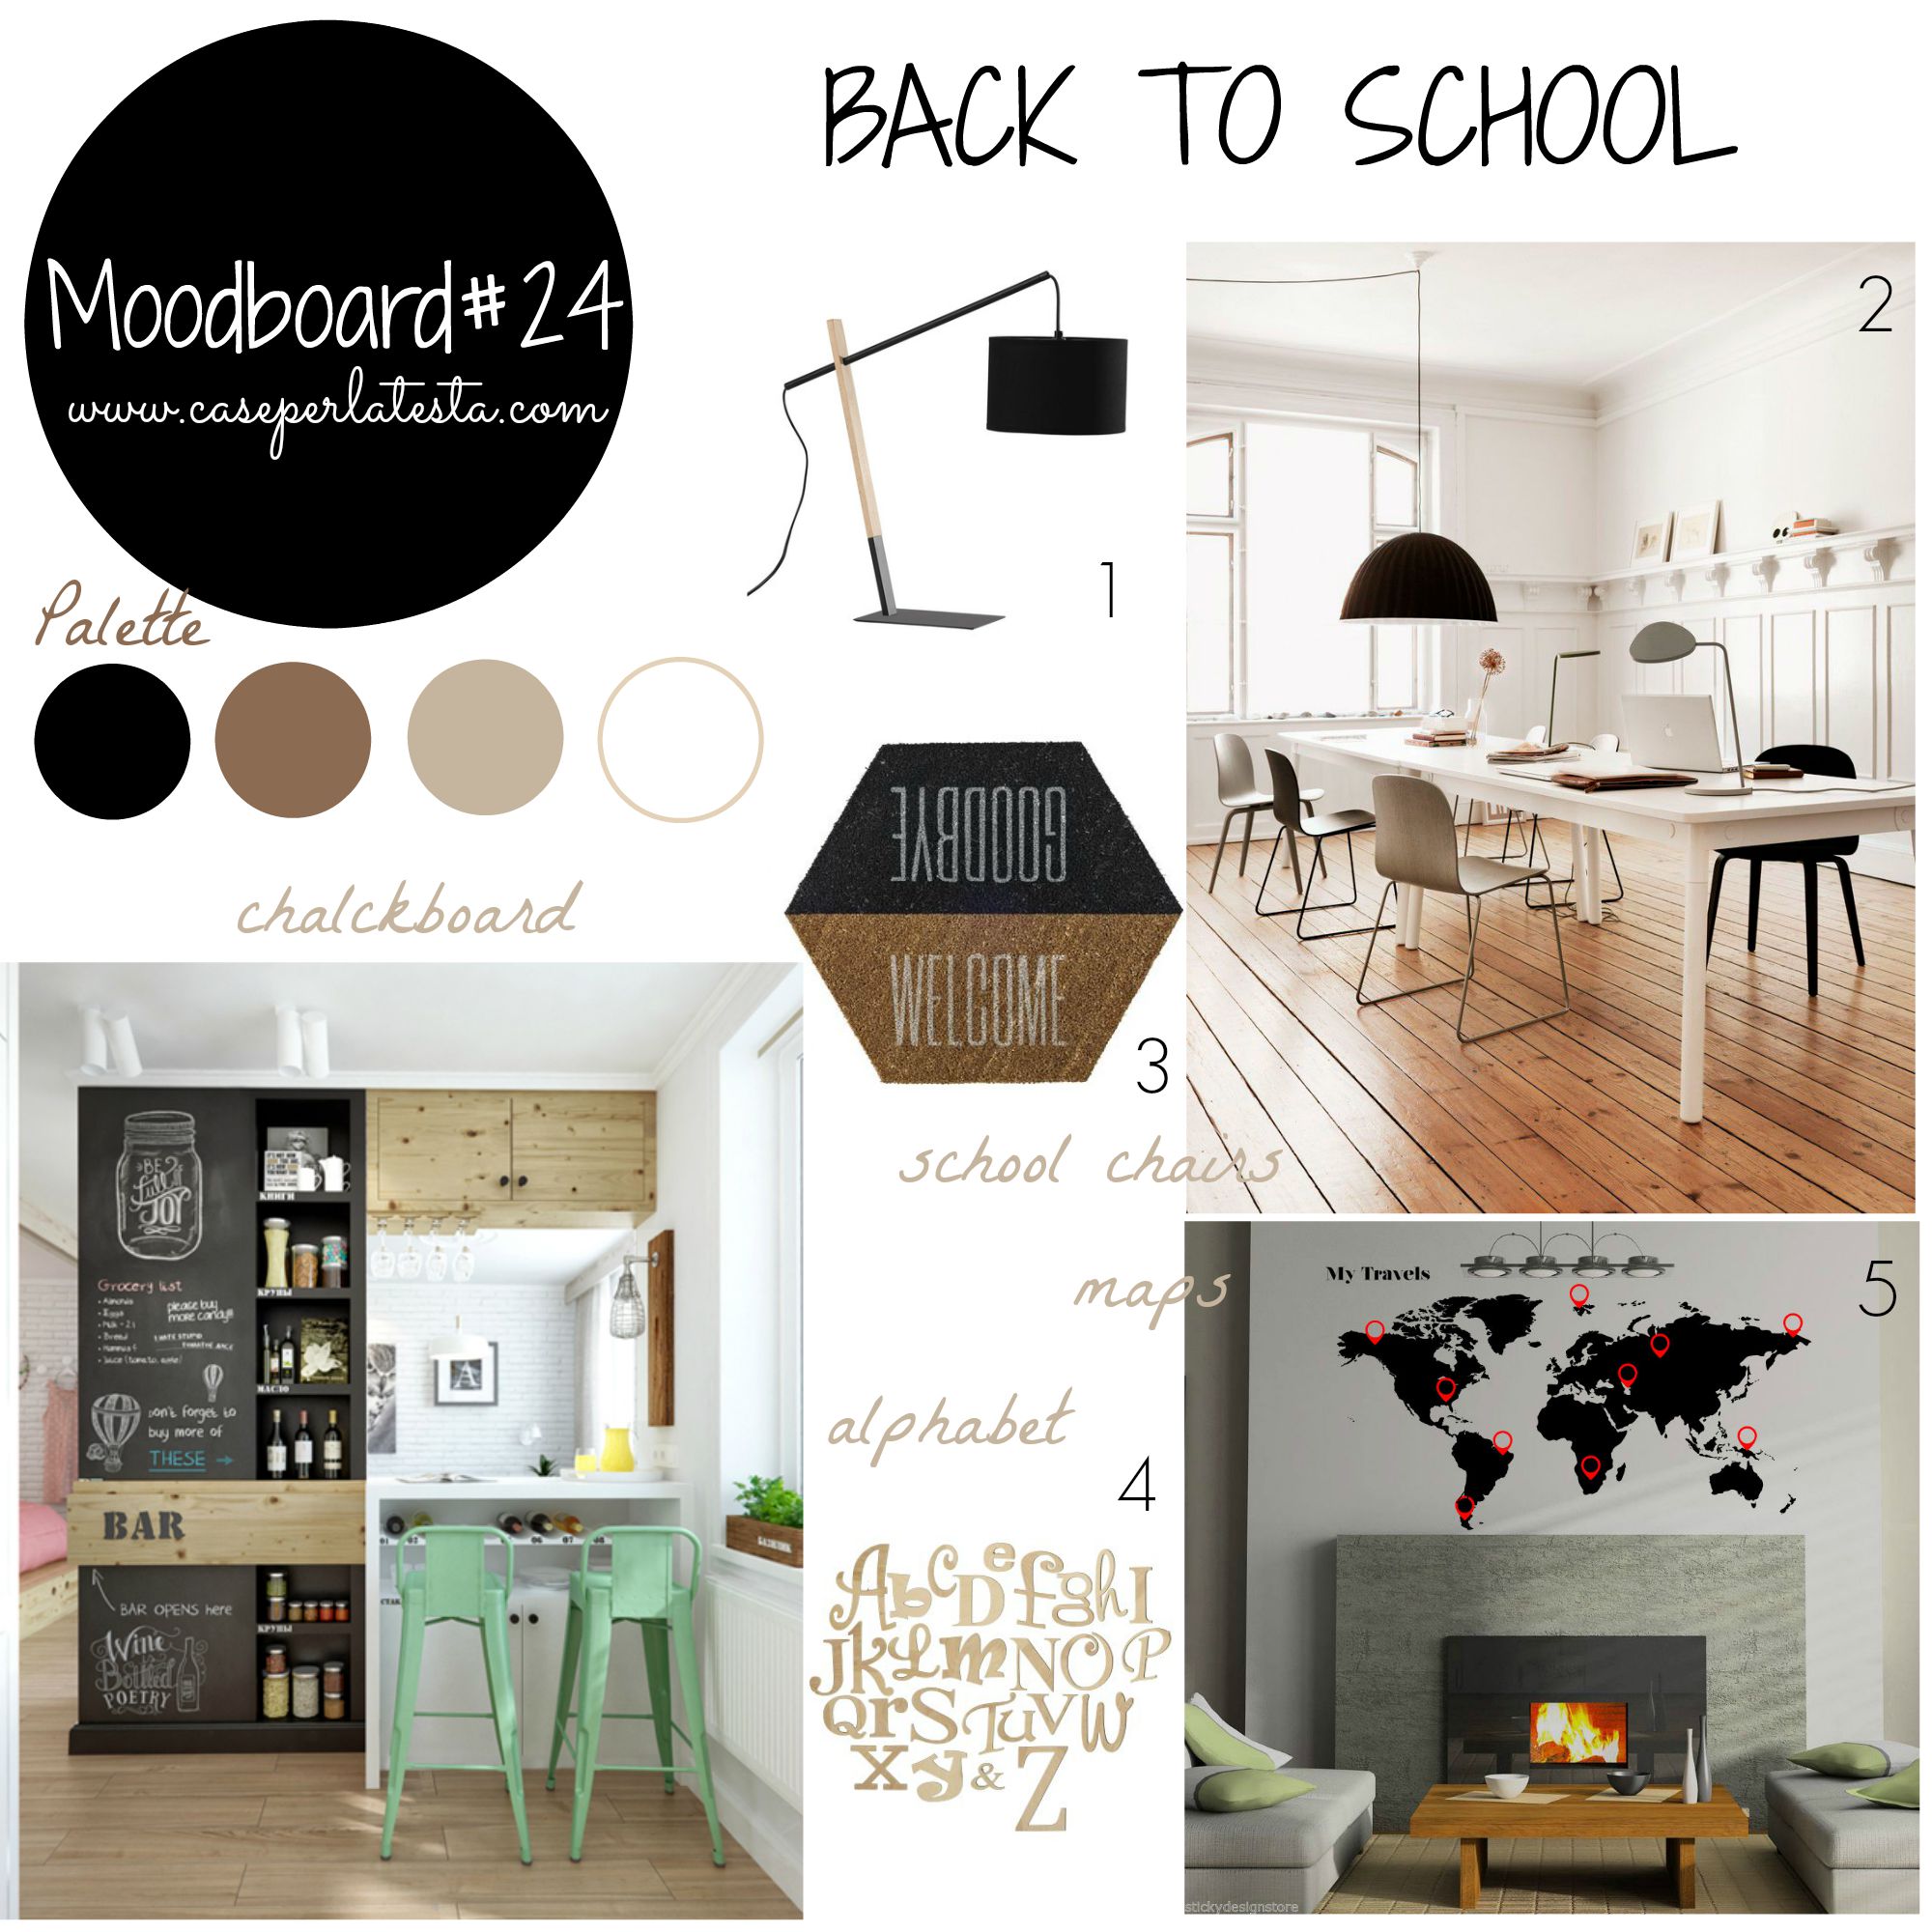 Moodboard#24-Back to school